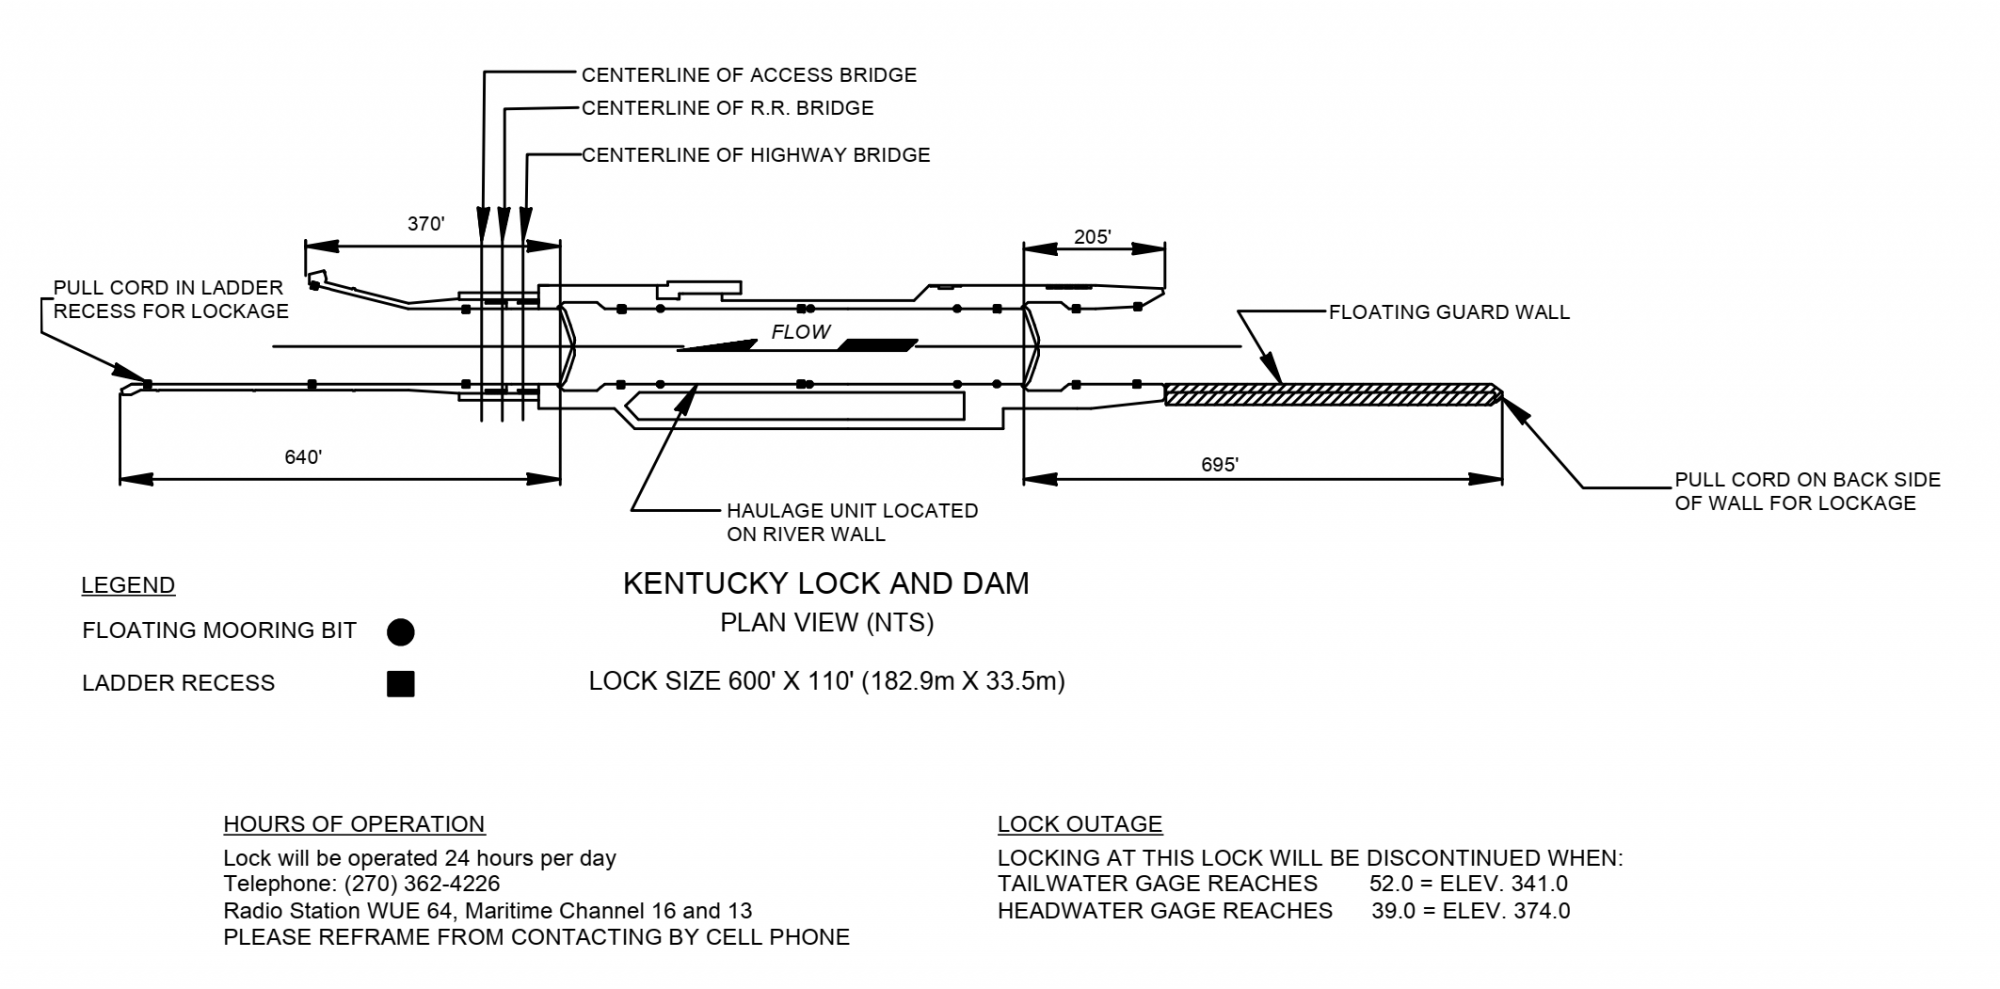 Kent Lock & Dam Clearances | Bridge Calculator LLC